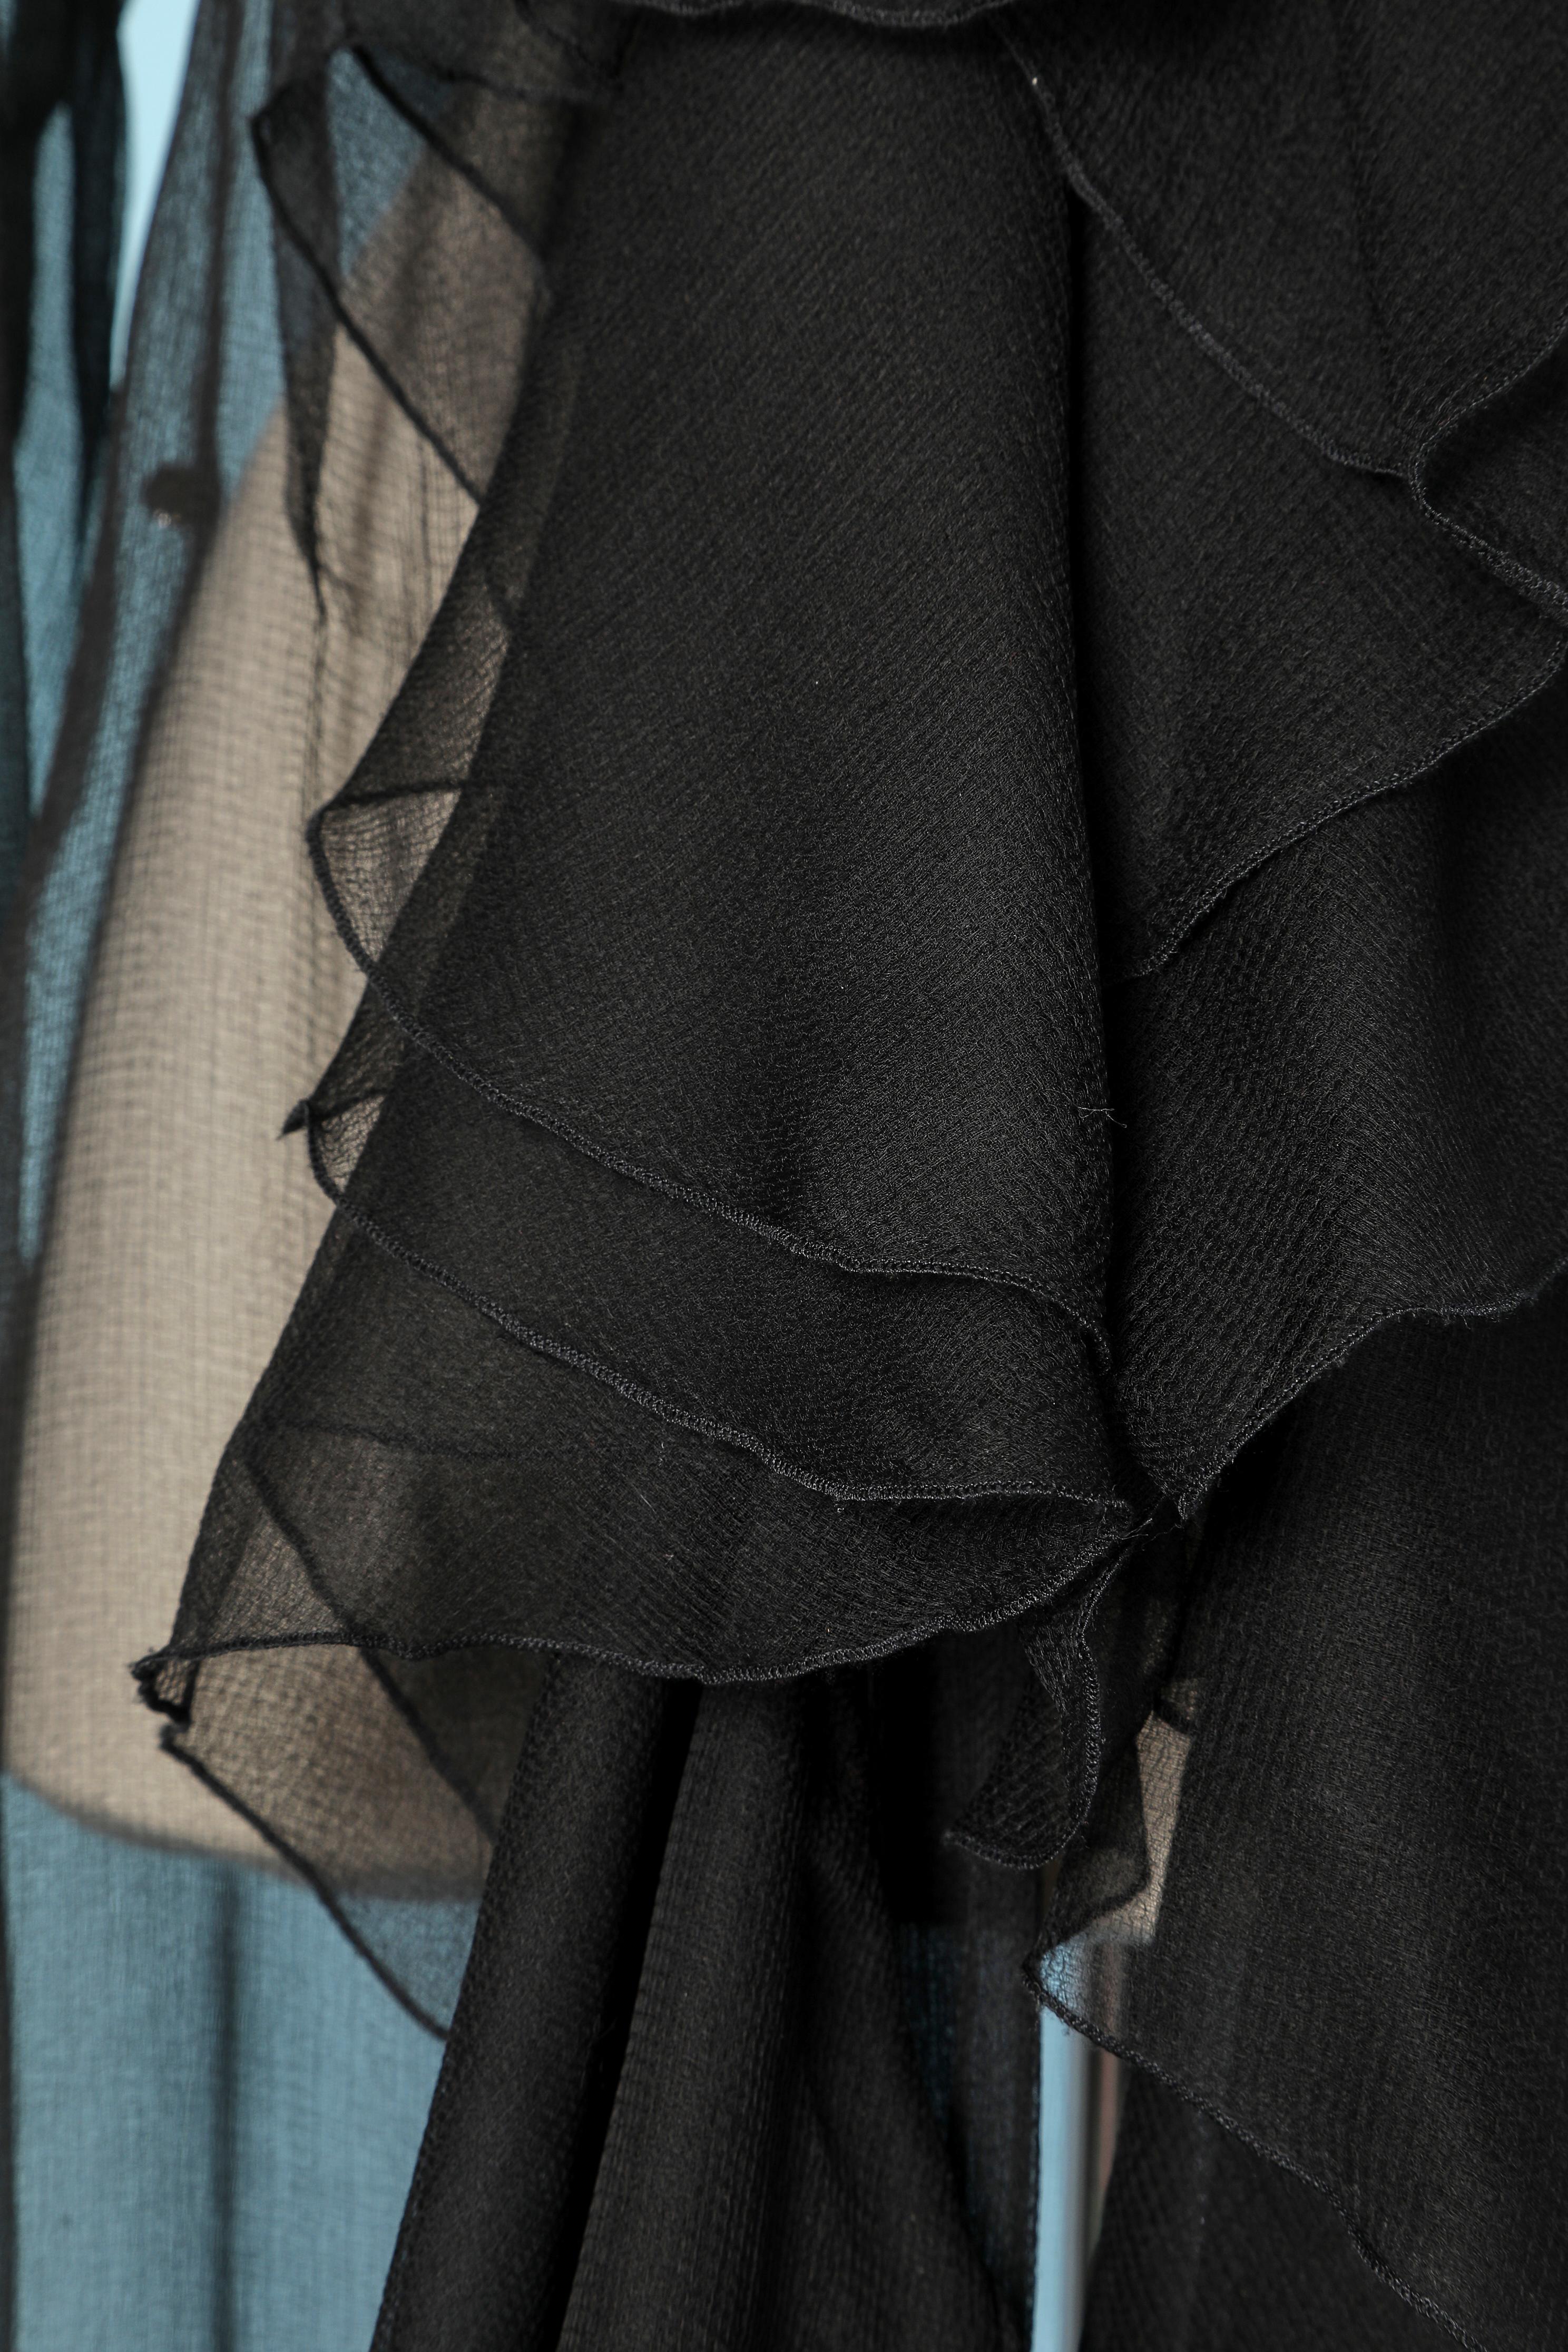 Black silk chiffon coat with ruffle edge. One rhinestone on the side on the waist
SIZE 40(L) 